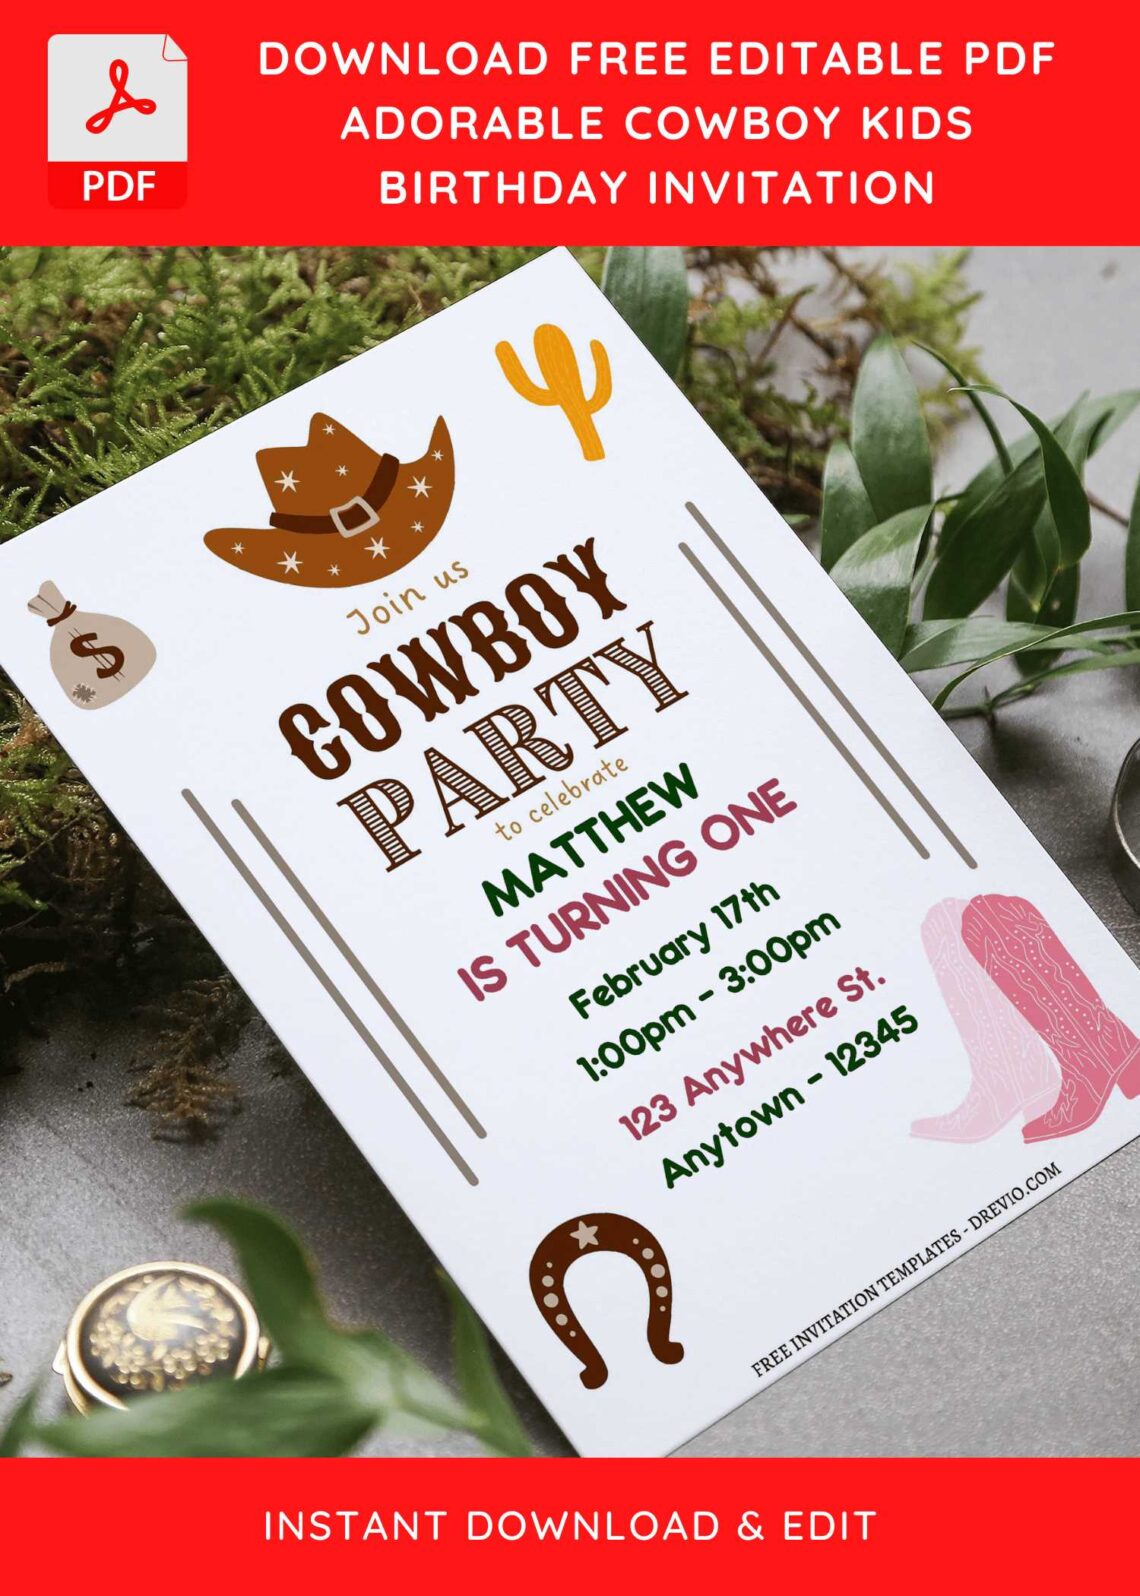 (Free Editable PDF) Fun Cowboy Western Theme Birthday Invitation Templates G